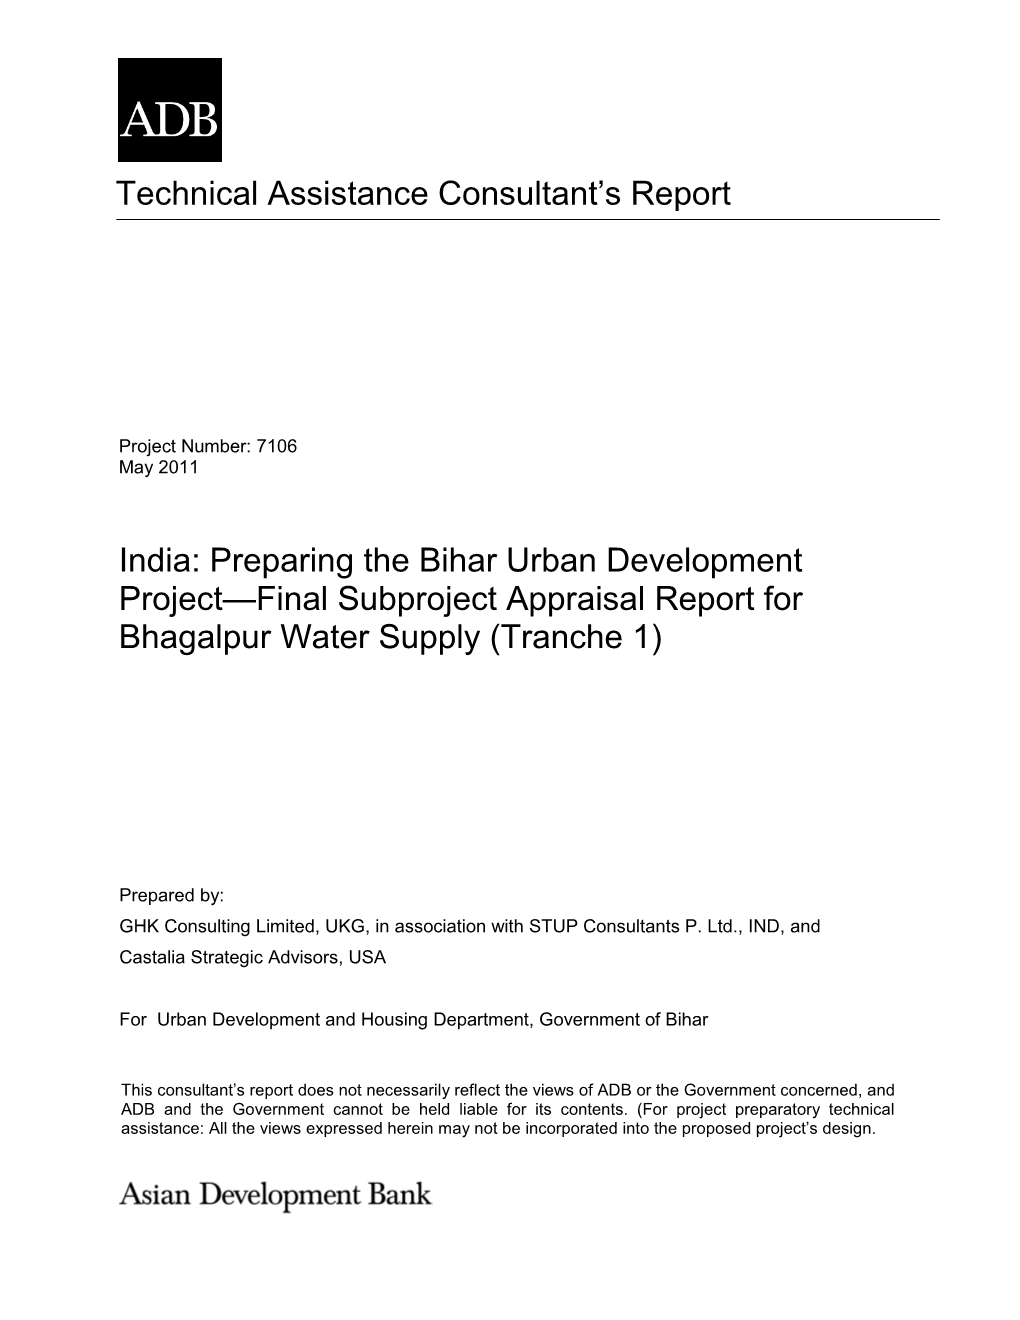 TACR: India: Bhagalpur Water Supply, Bihar Urban Development